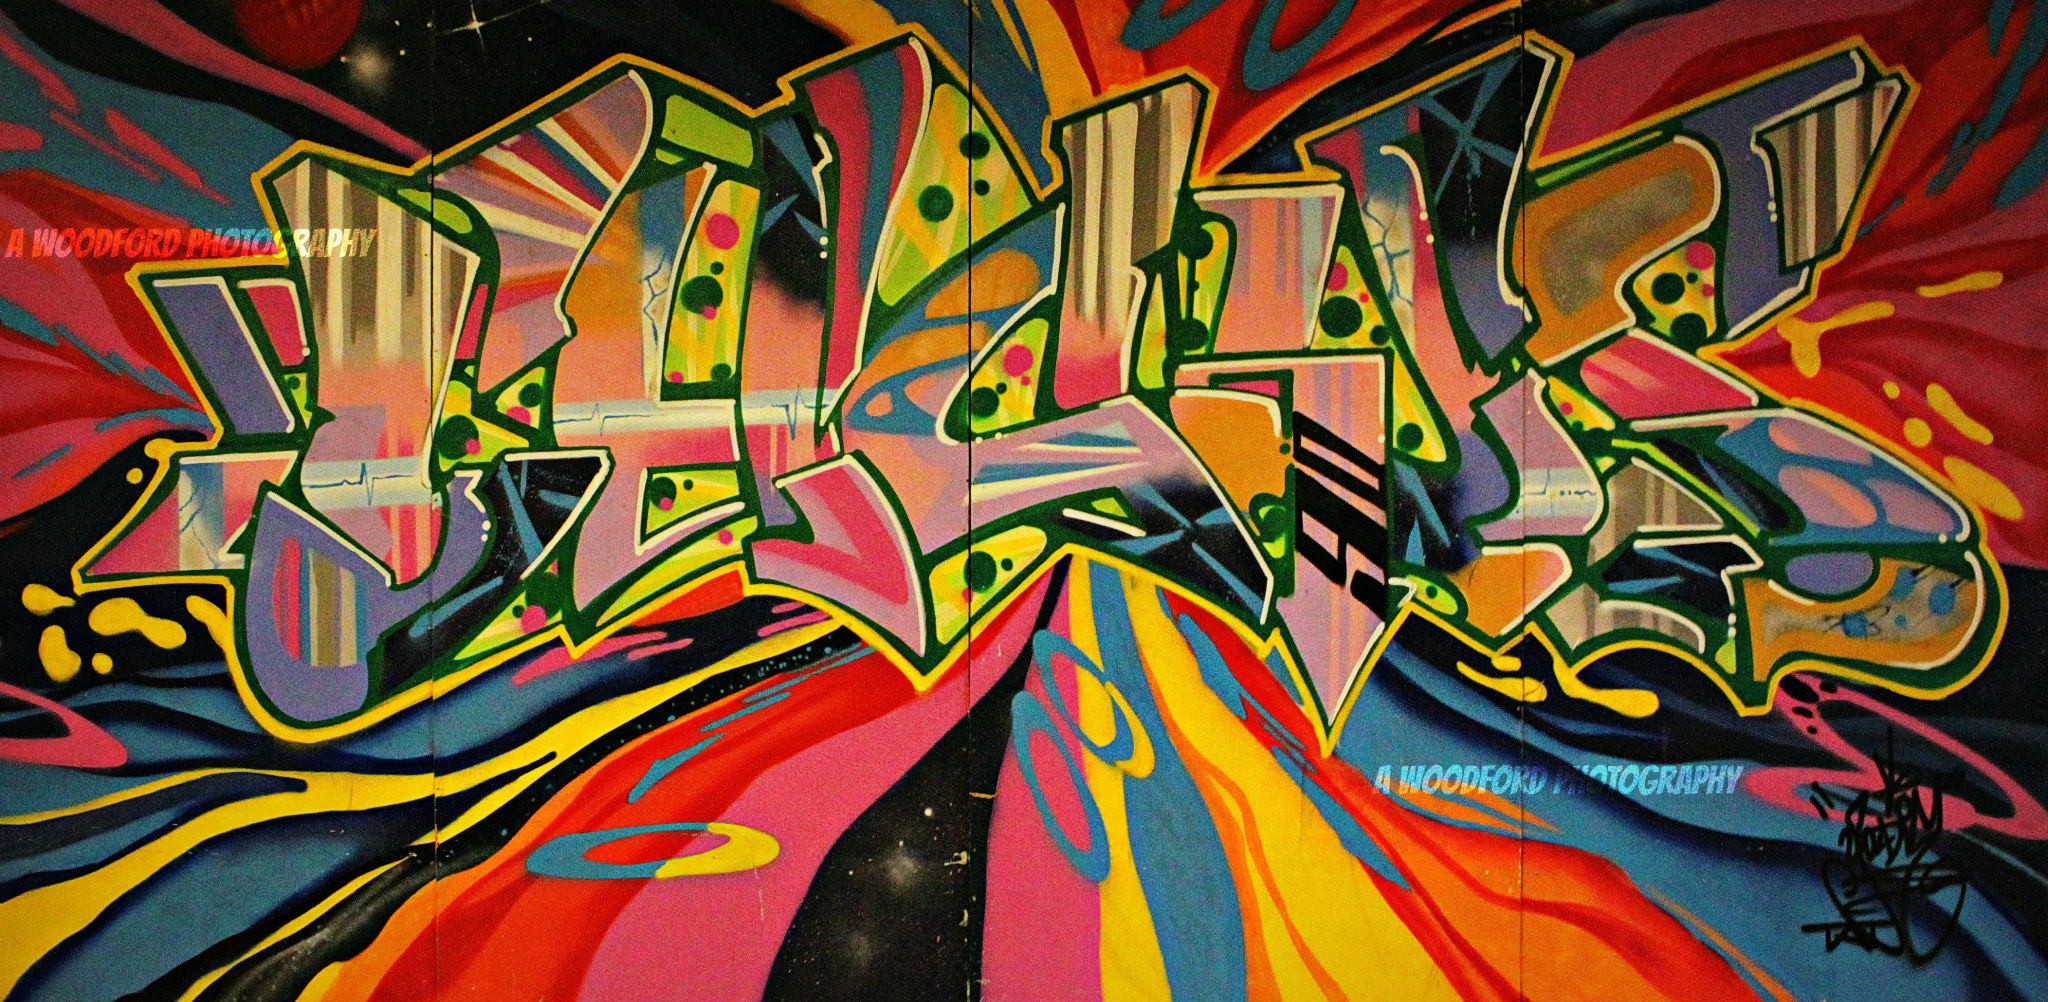 100 UK Graffiti Artists #1 | UK Street Art